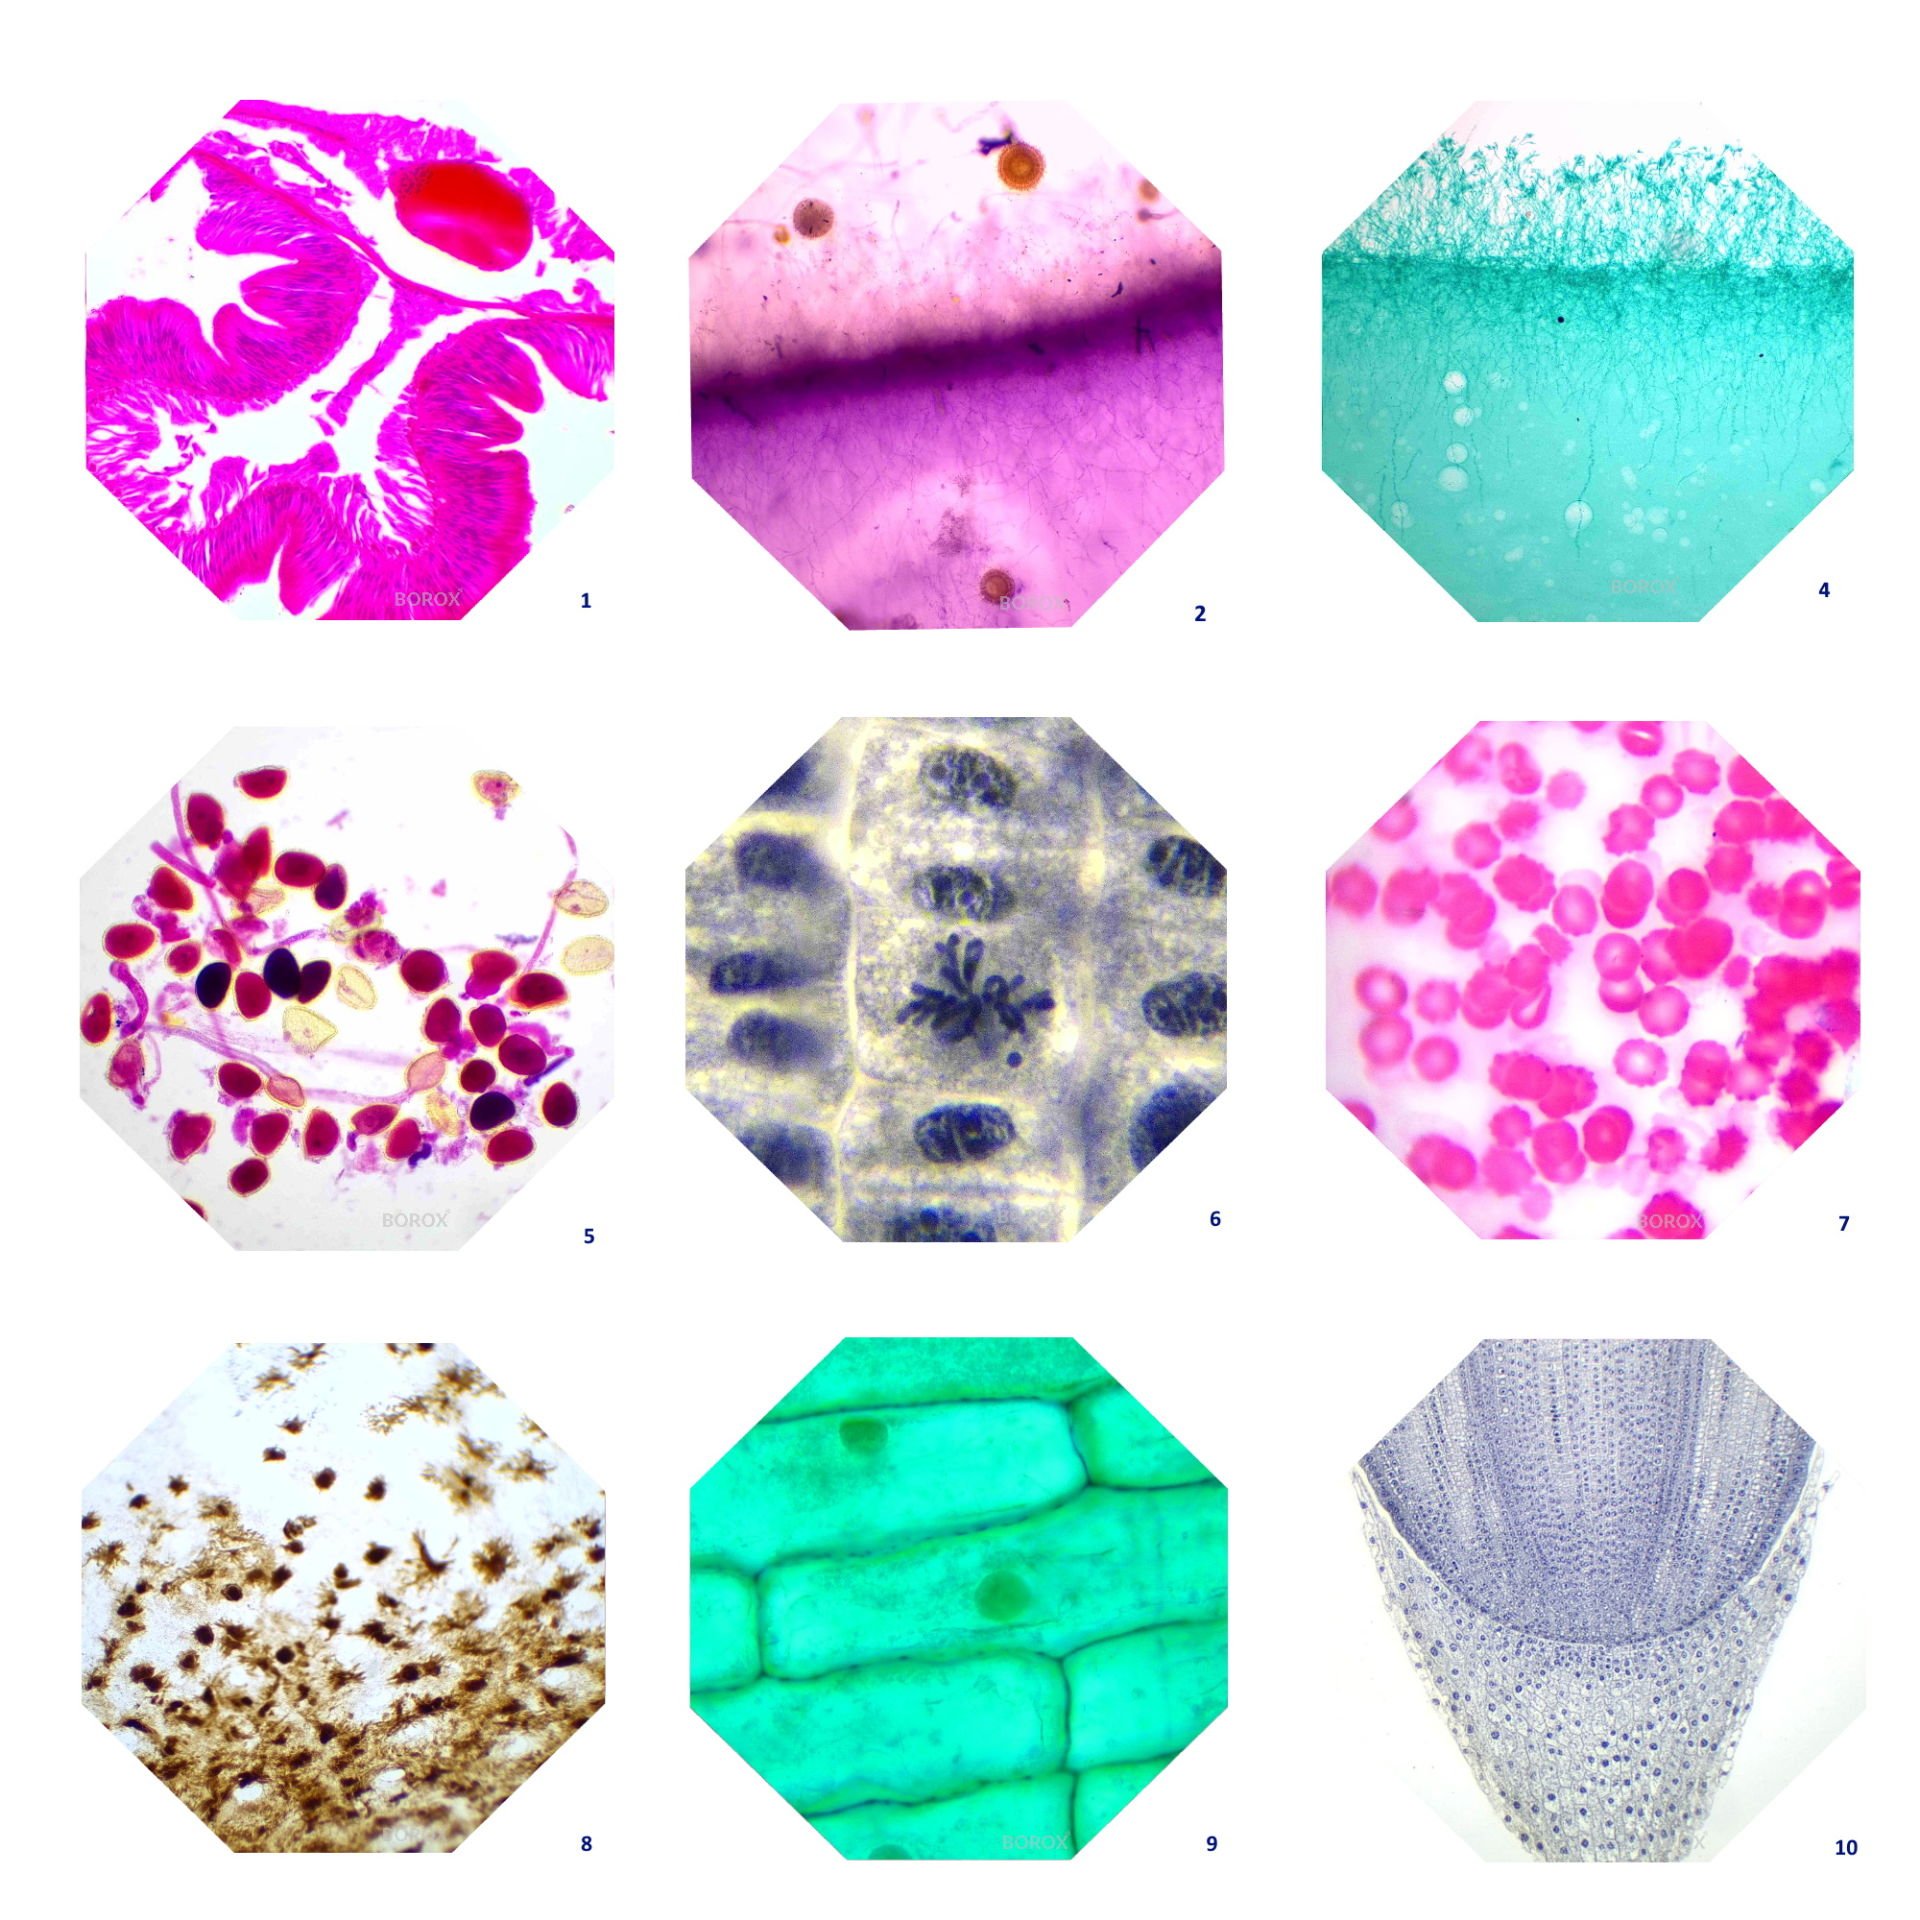 Mikroskop Slayt Seti - 10 Slayt - Bitkiler ve Böcekler